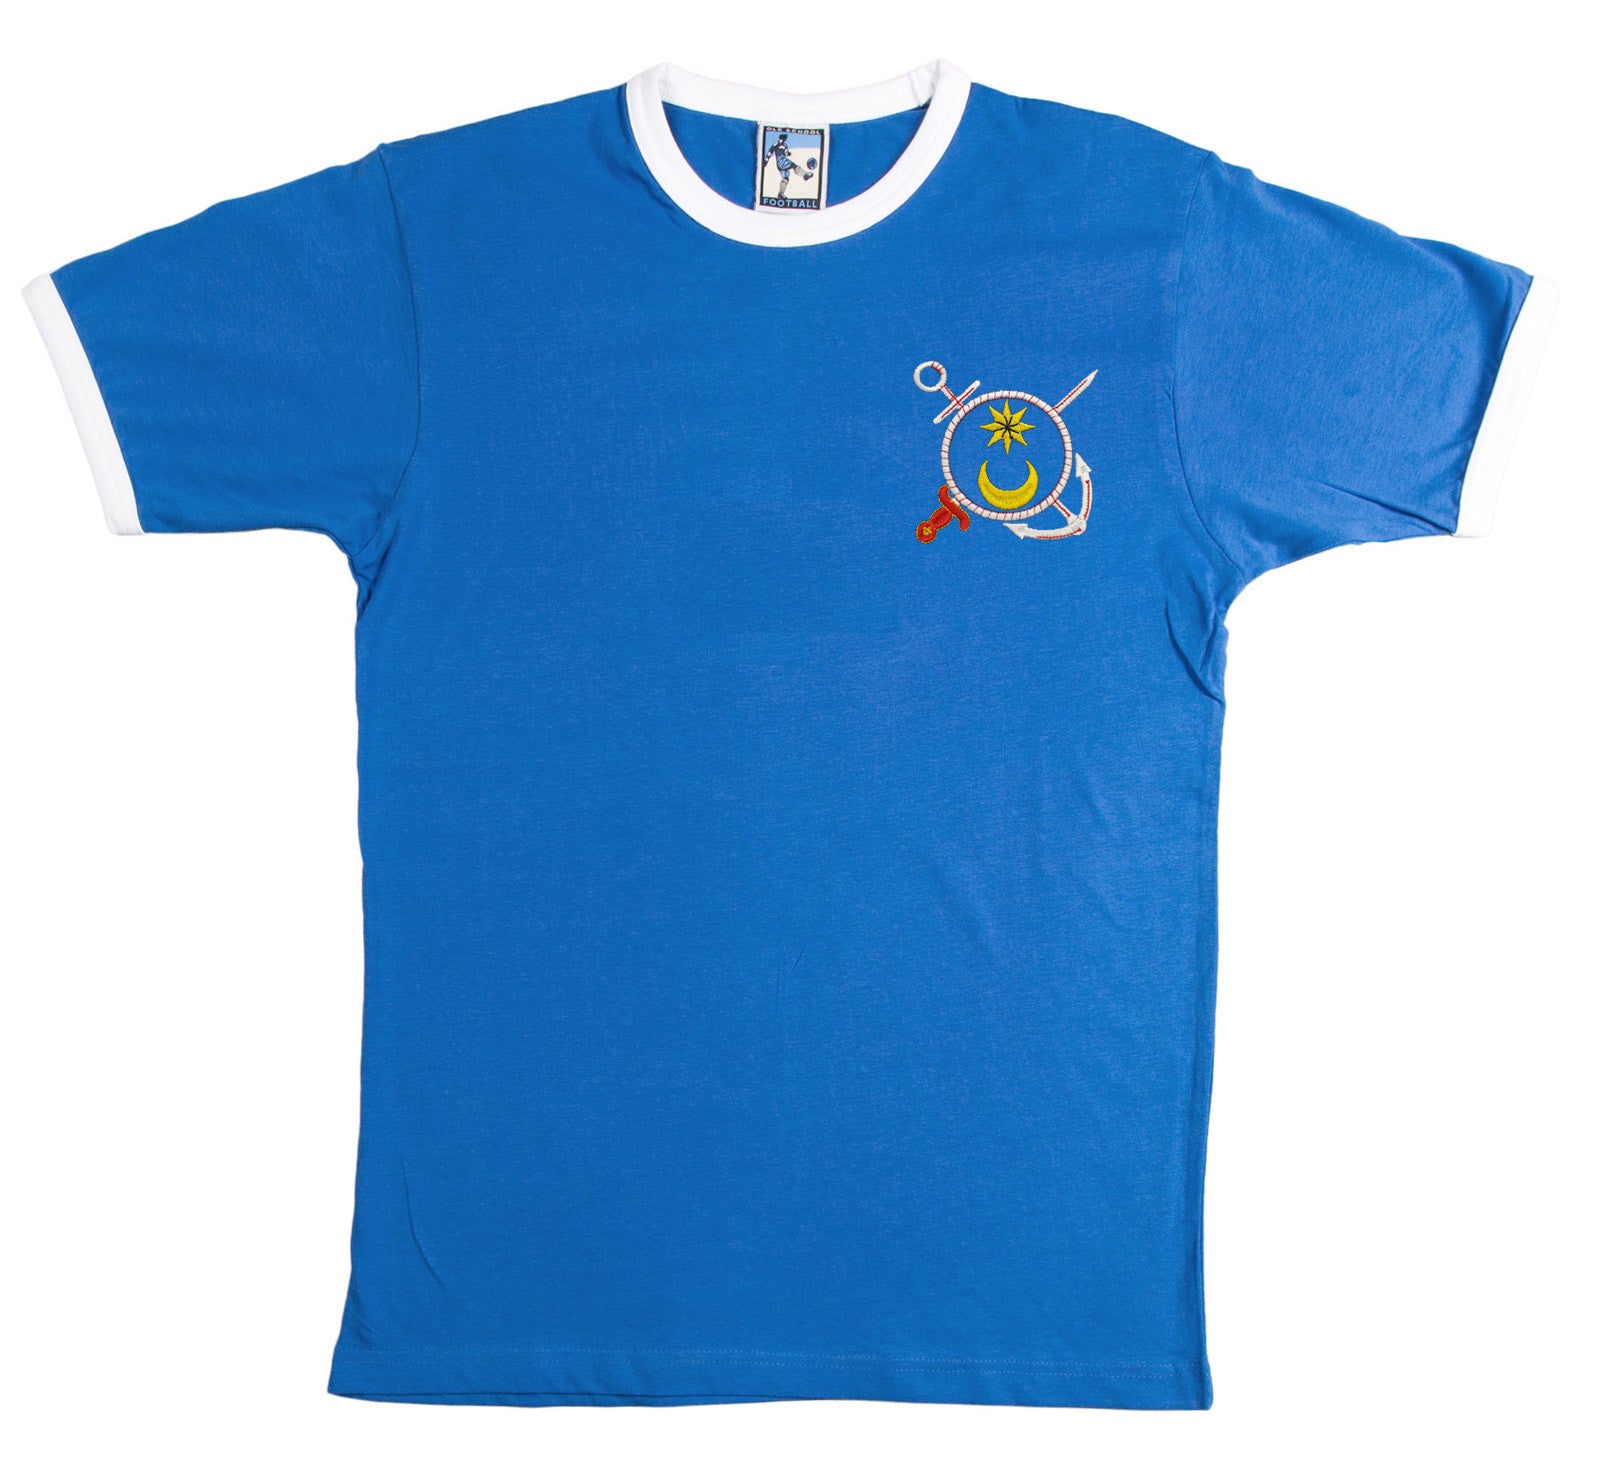 Portsmouth Retro Football T Shirt 1970s - Old School Football